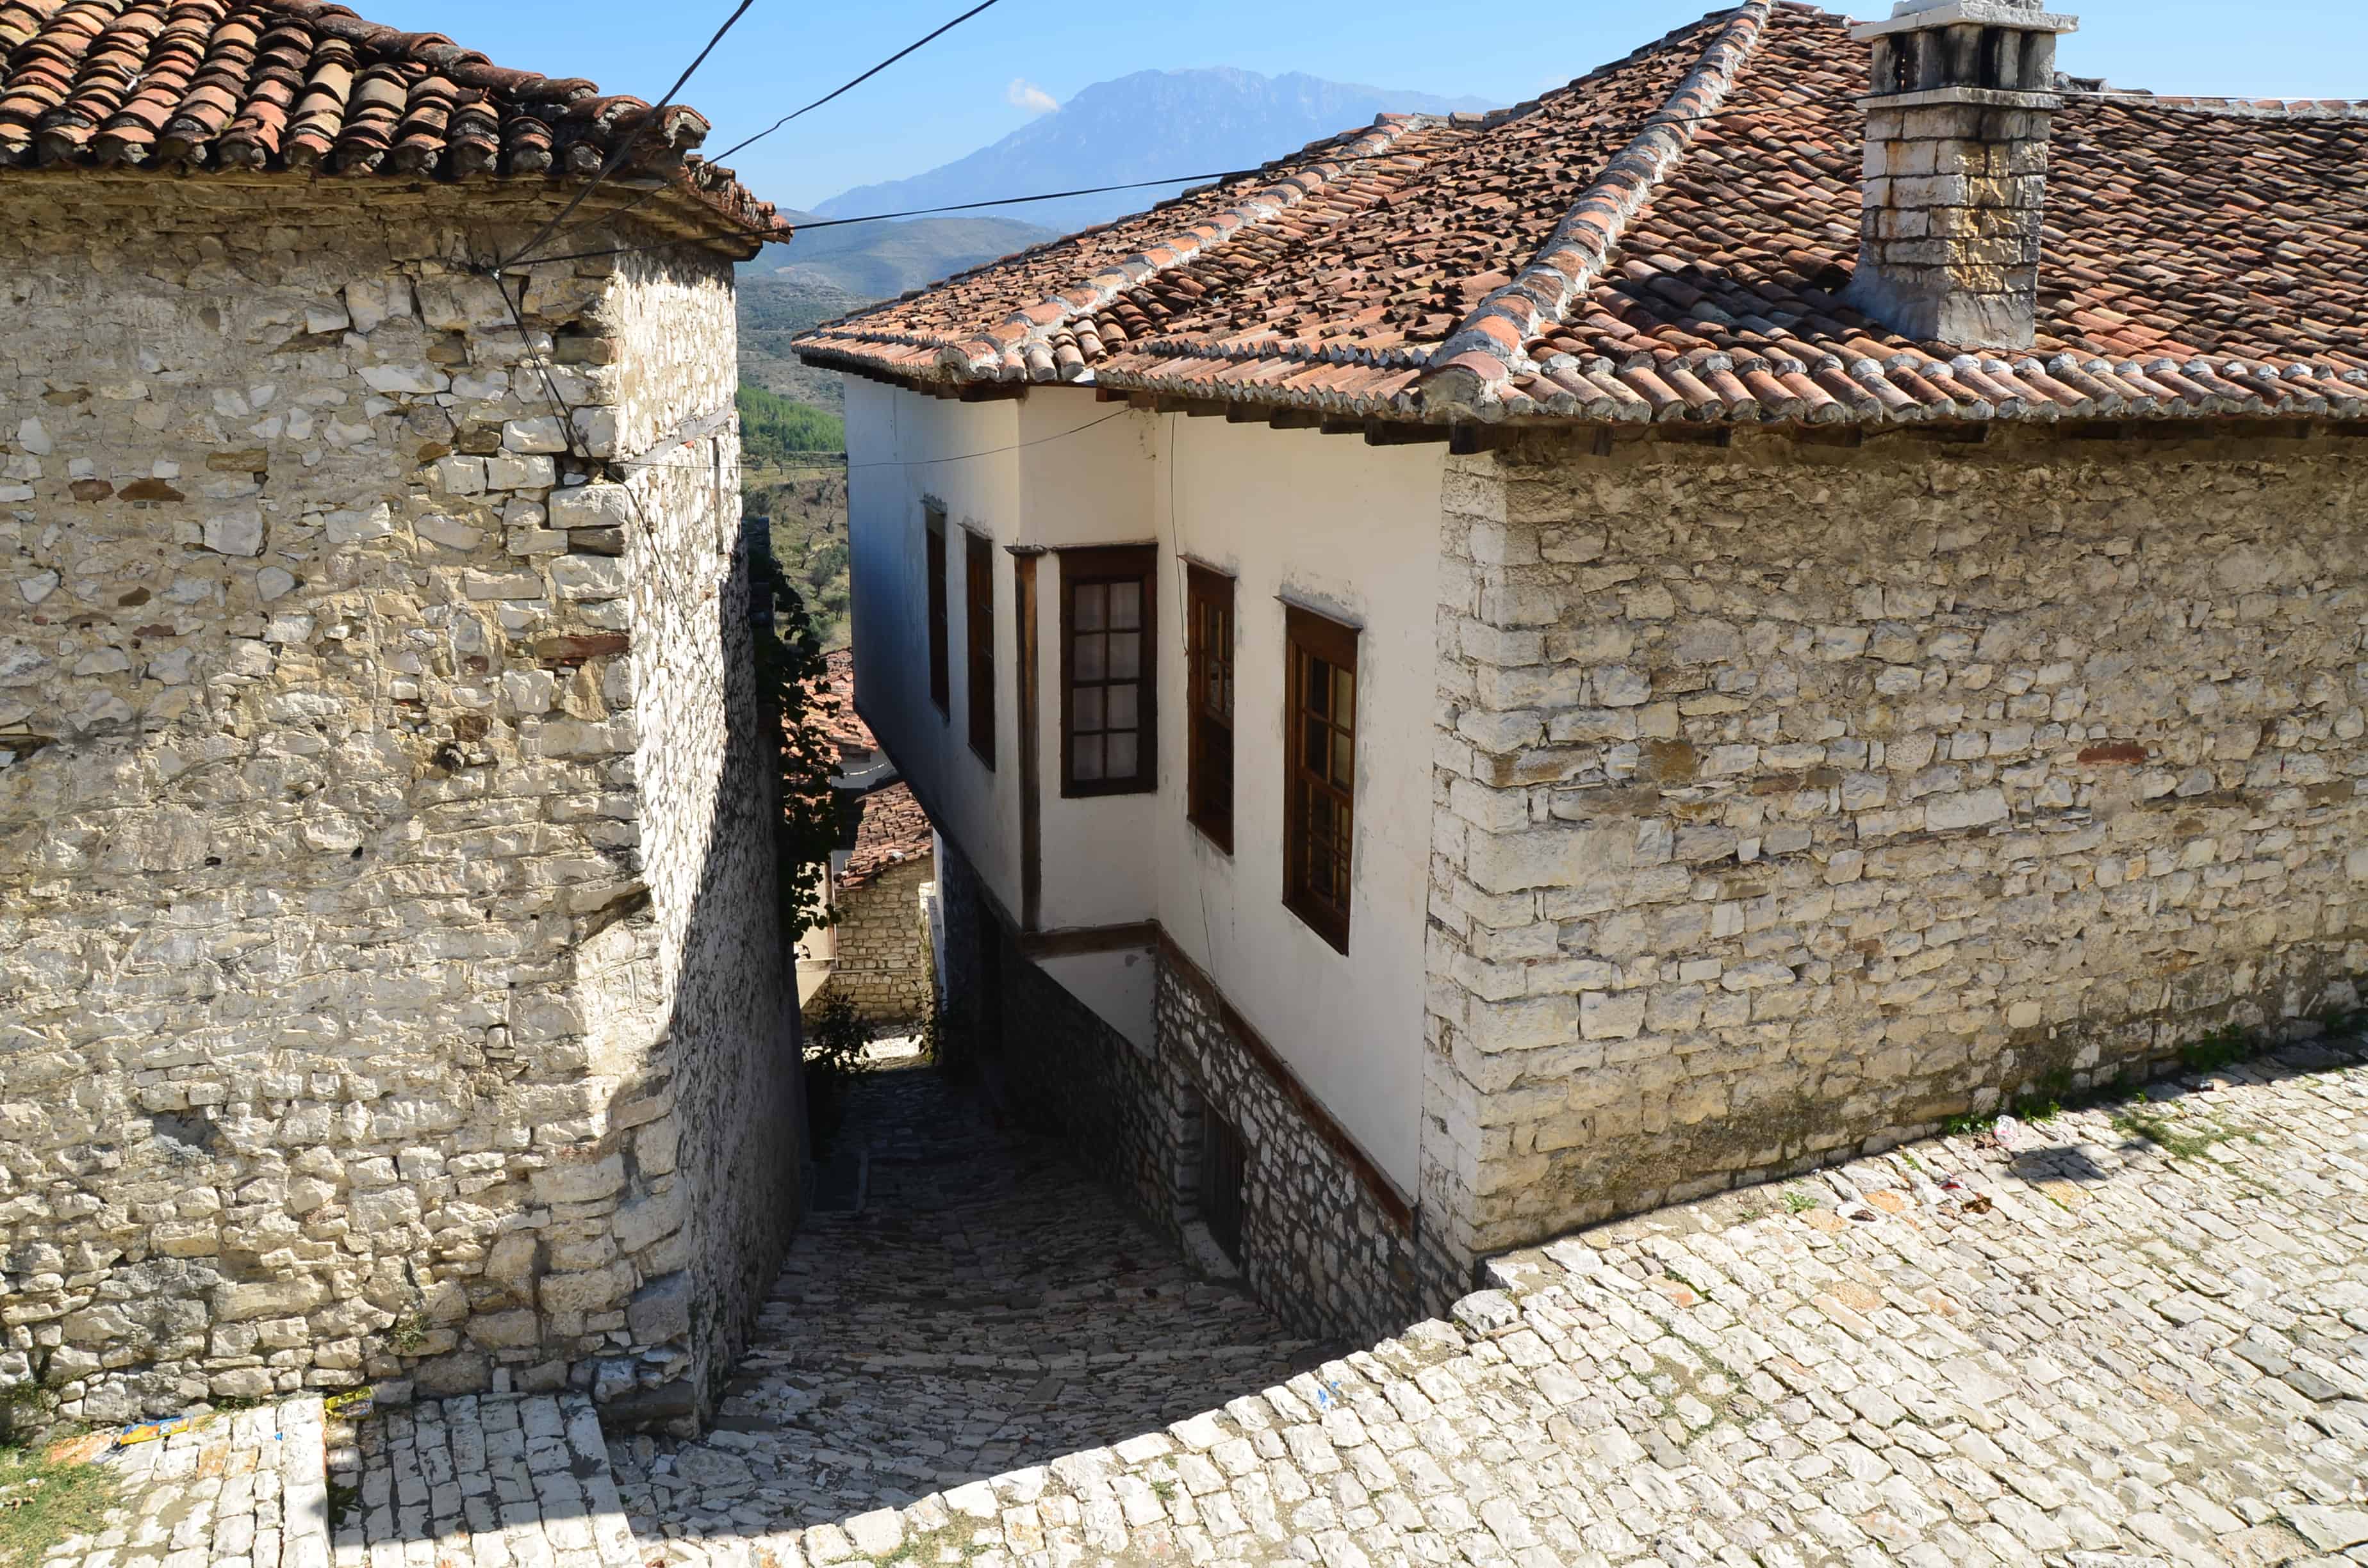 Homes in Berat Castle in Berat, Albania